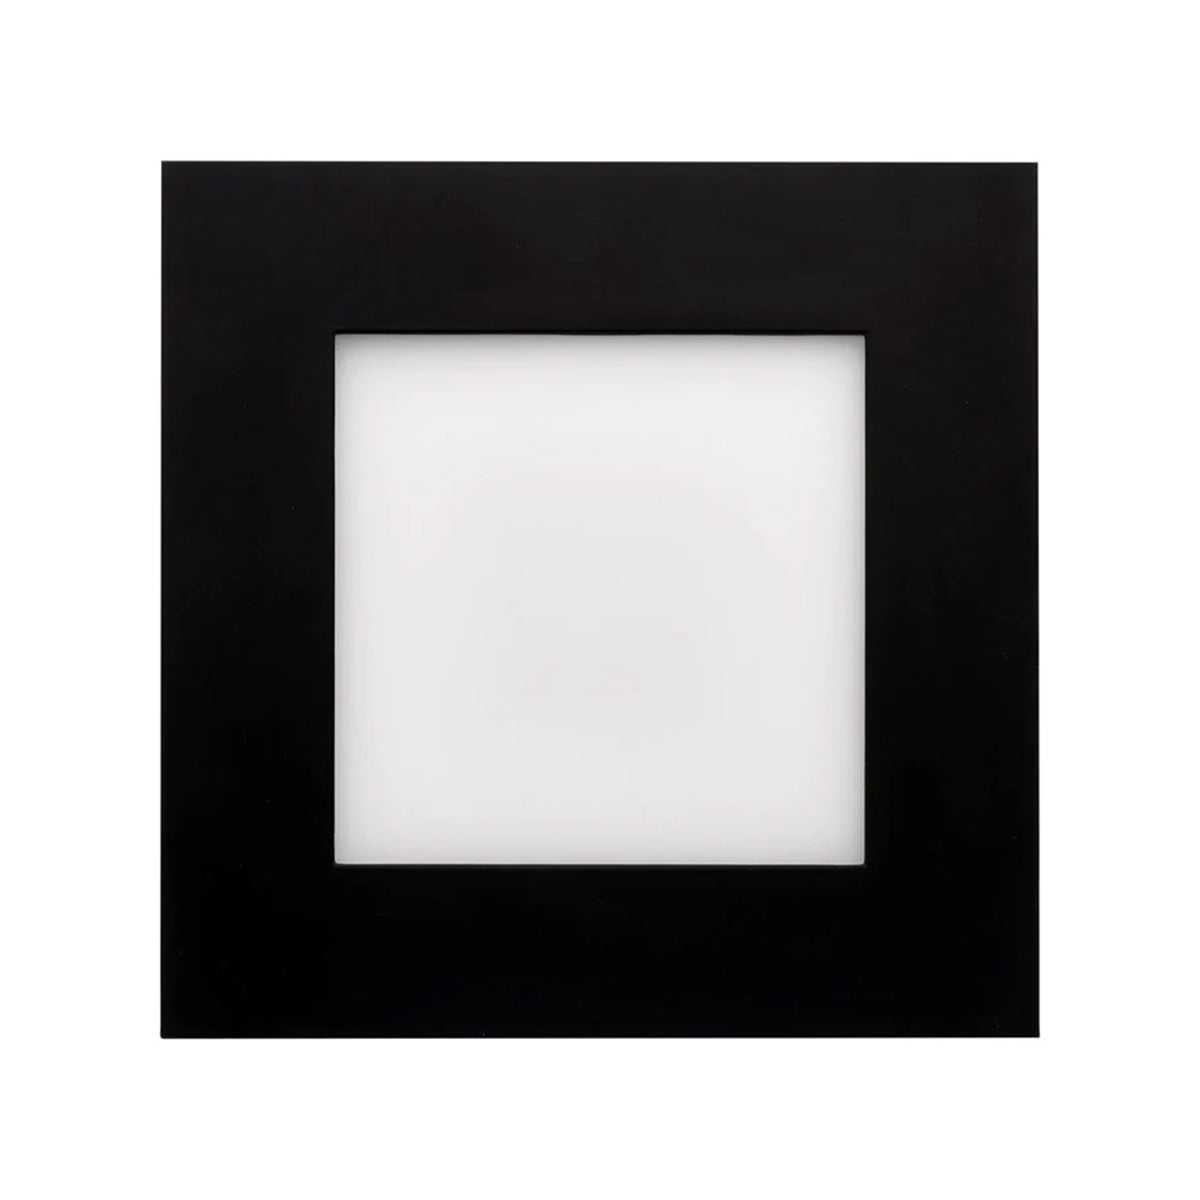 Slim Fit Canless LED Recessed Light, 6 inch, Edge-Lit, Square, 12 Watt, 750 Lumens, Selectable CCT, 2700K to 5000K, Black Finish